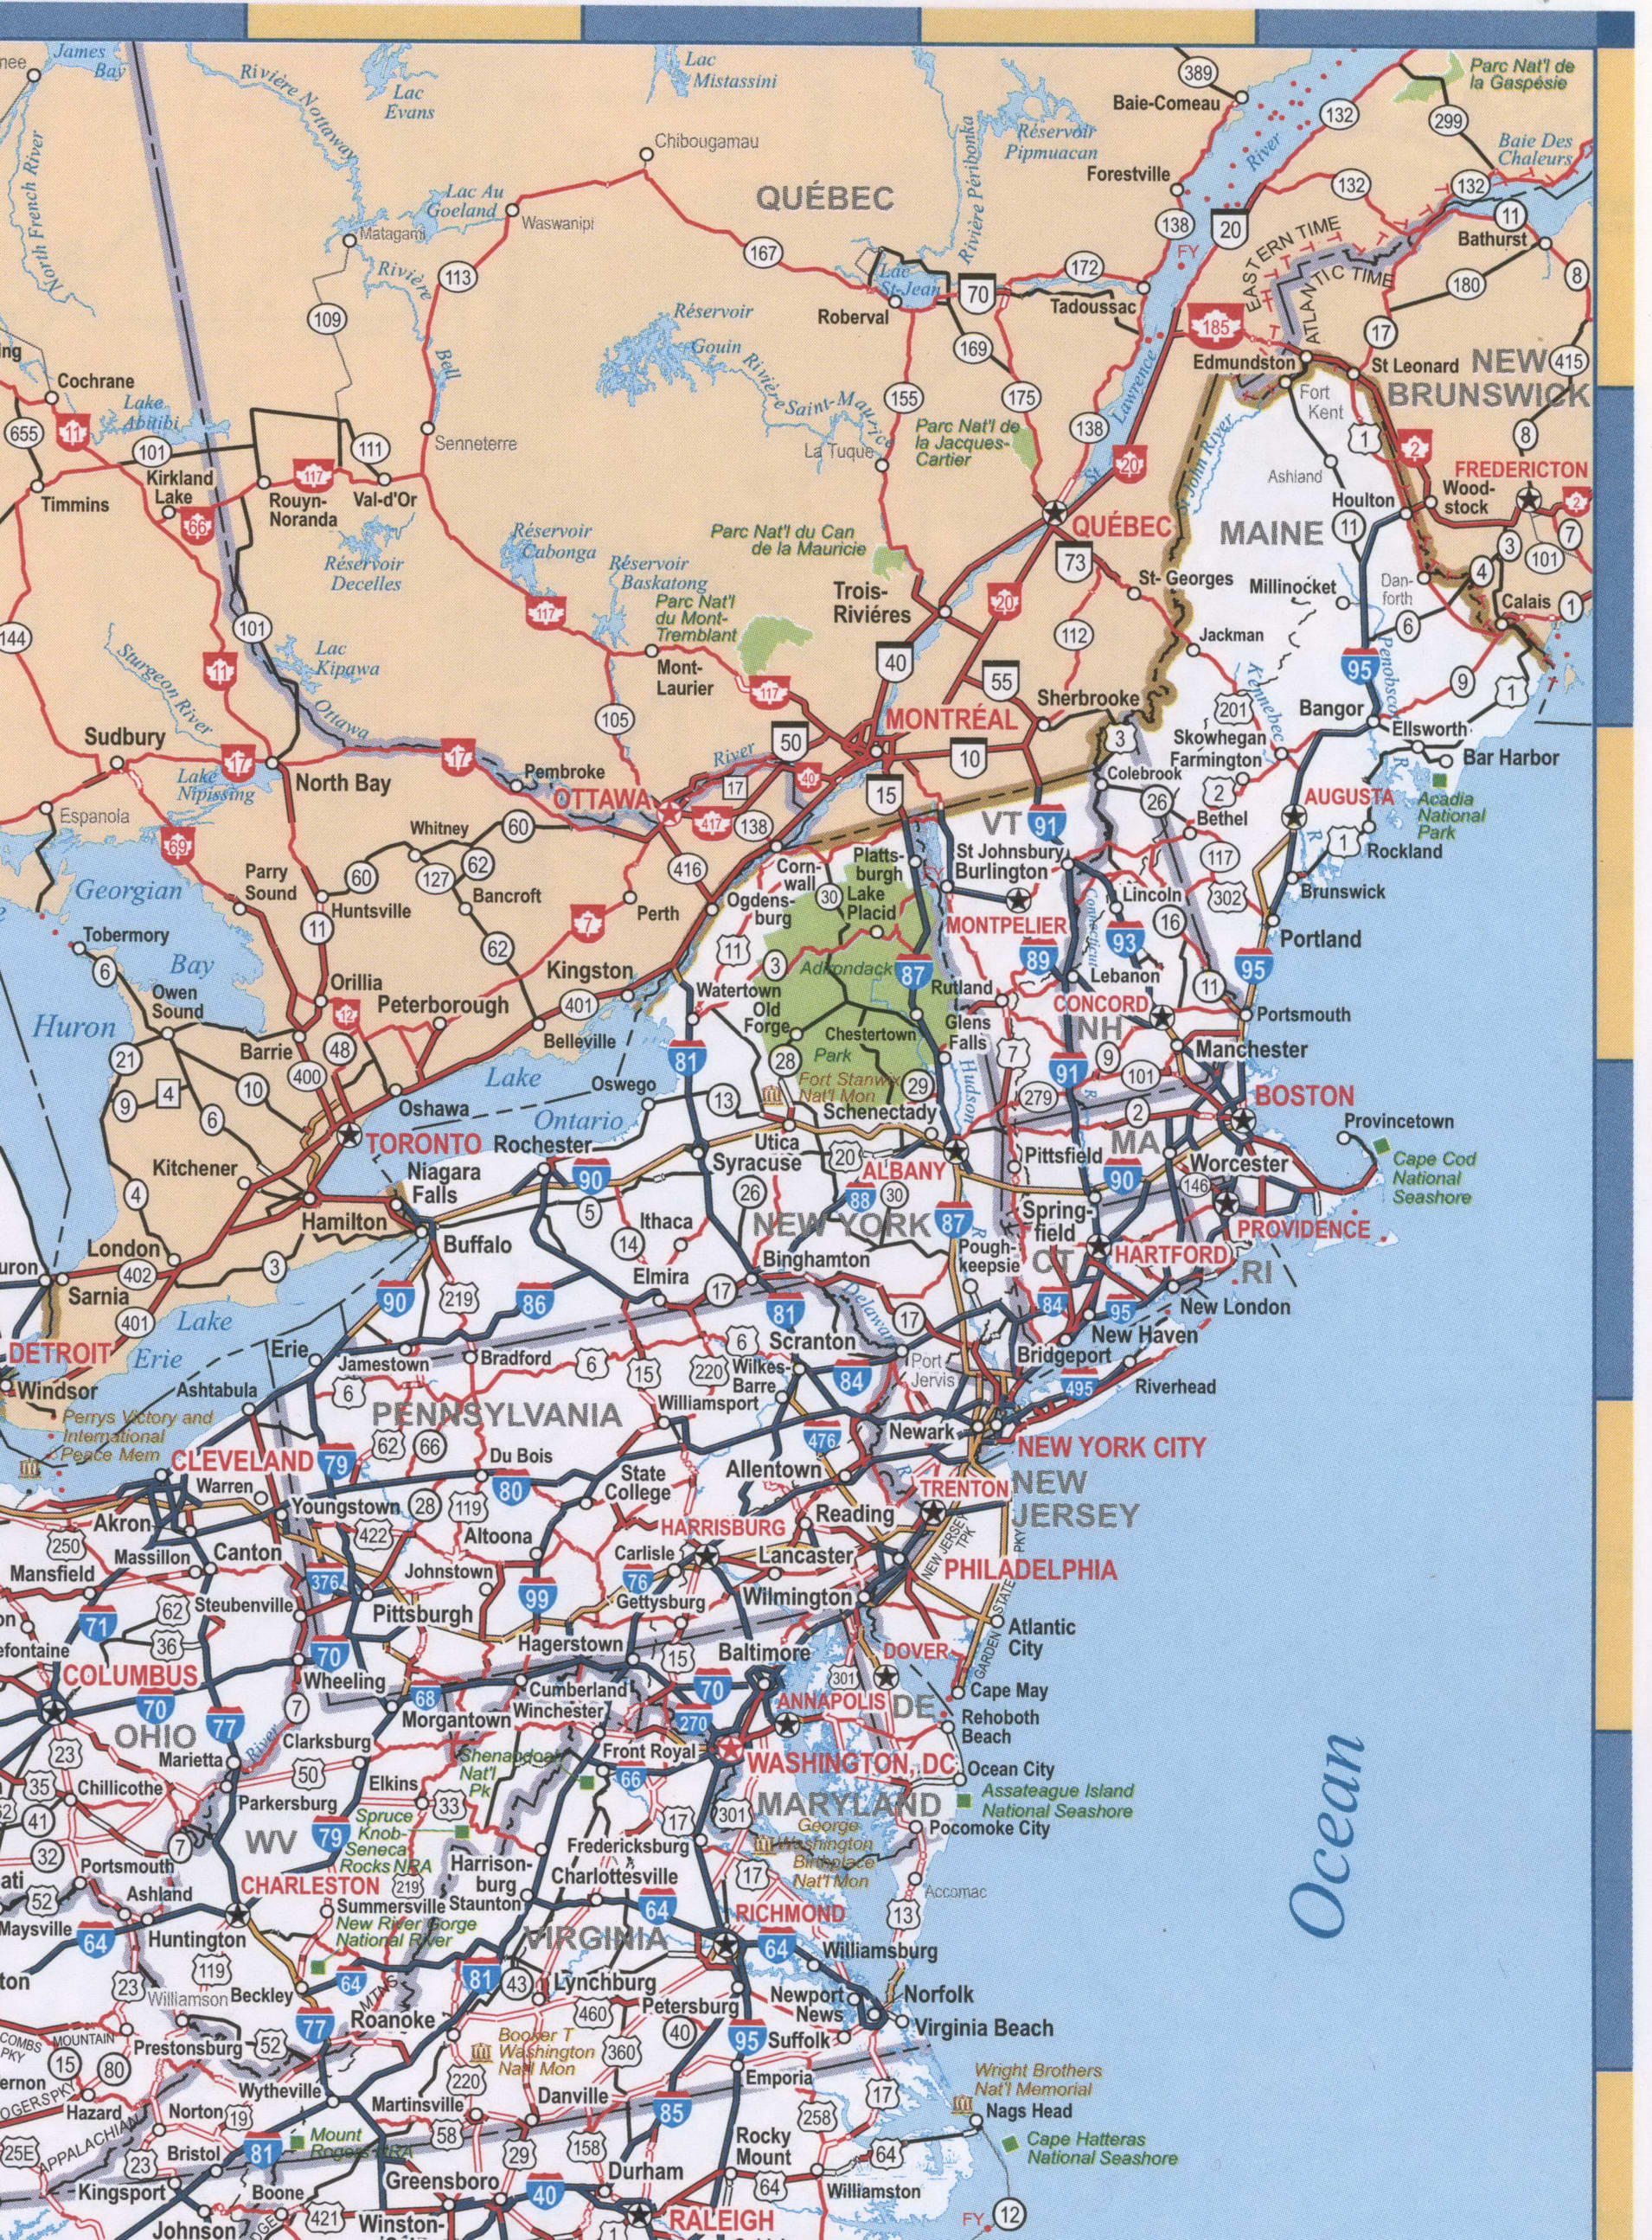 Map of New England region USA